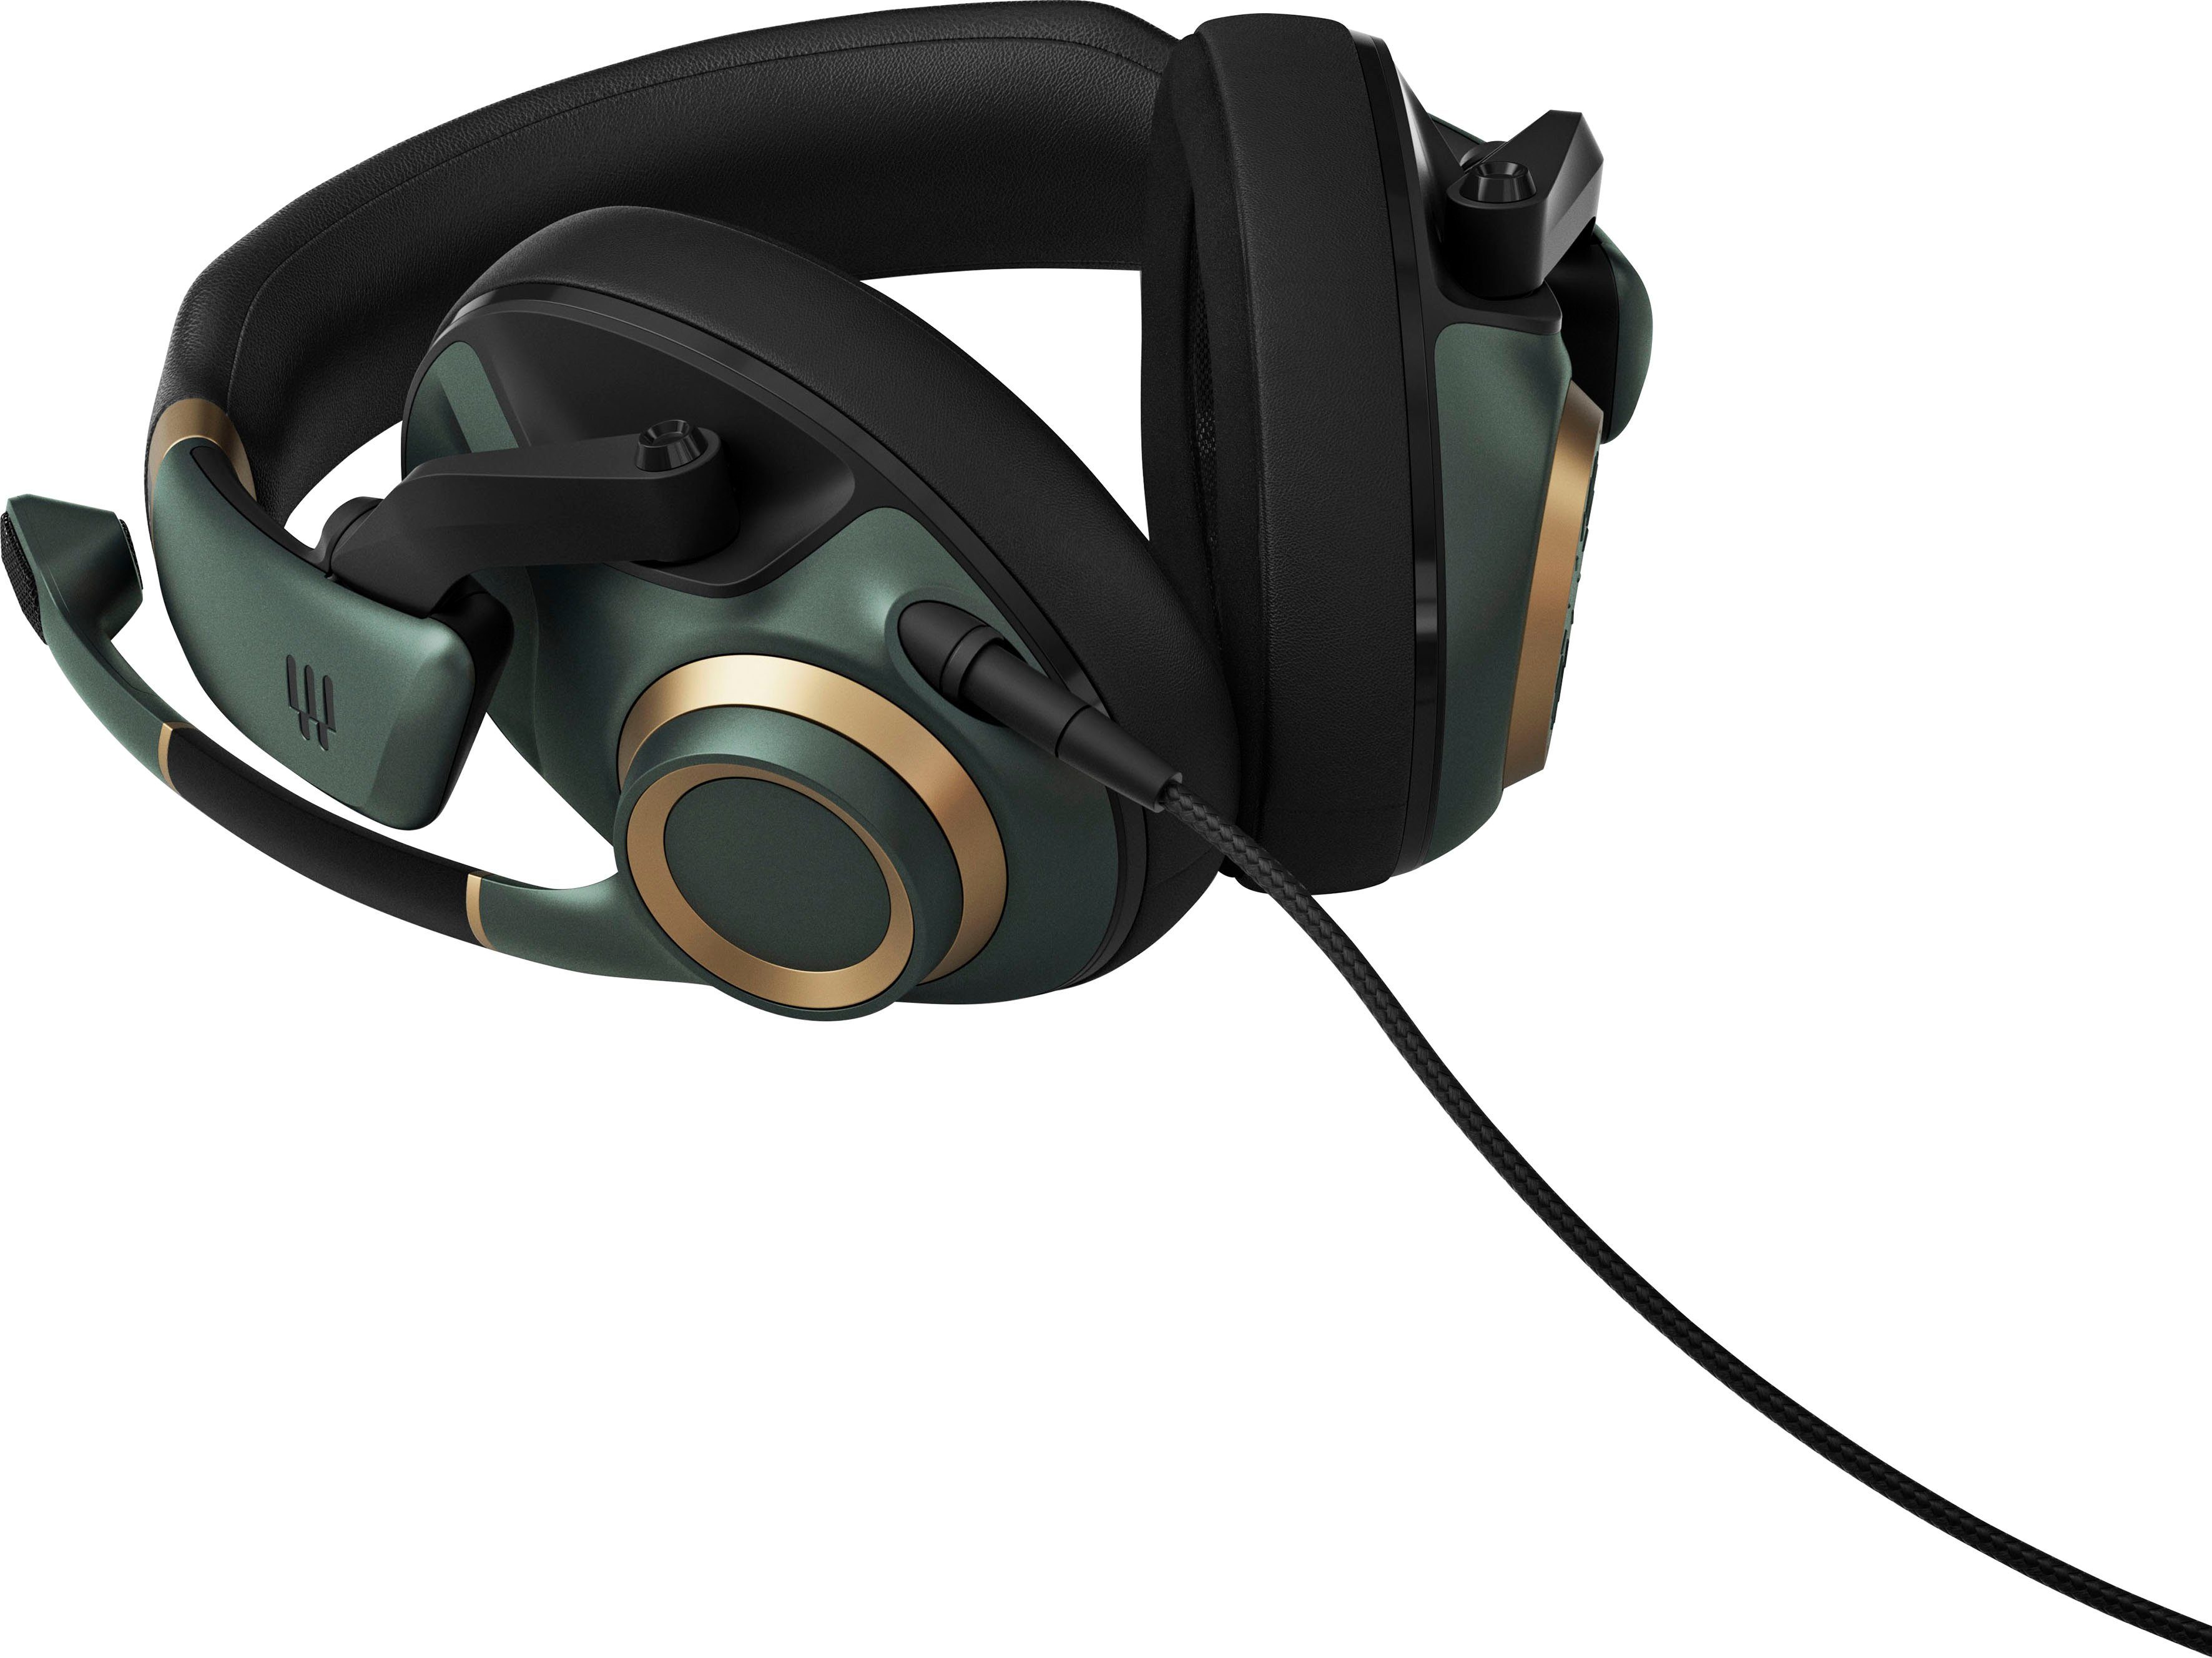 H6 grün Pro Acoustic EPOS Gaming-Headset Closed